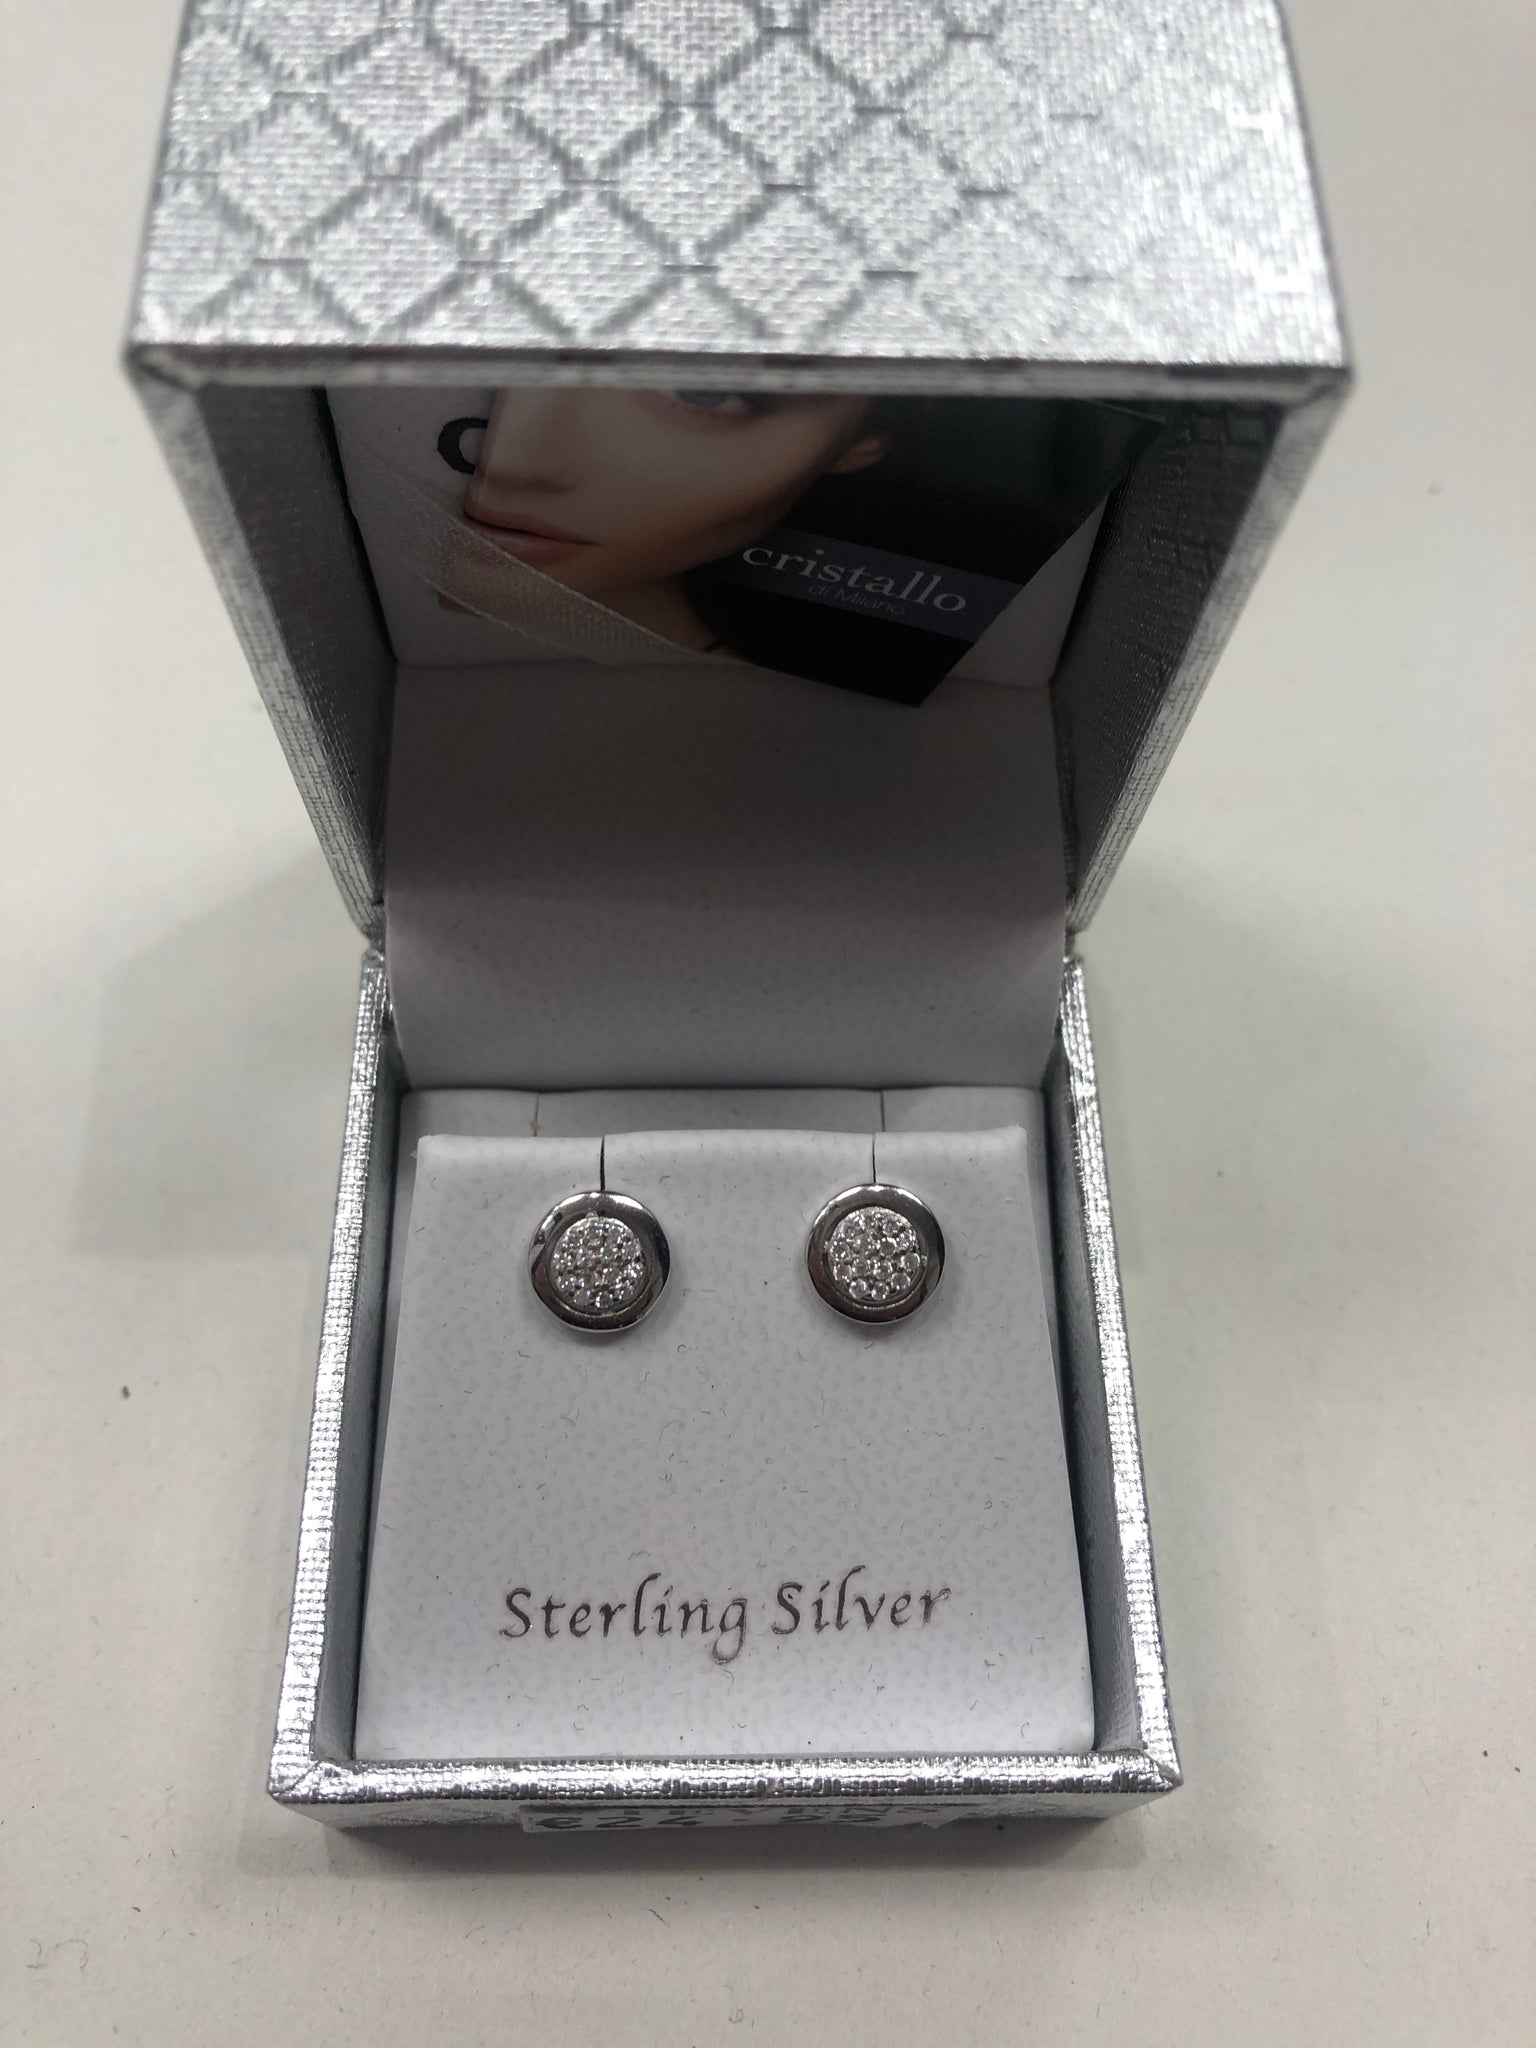 Cristallo silver stud earrings